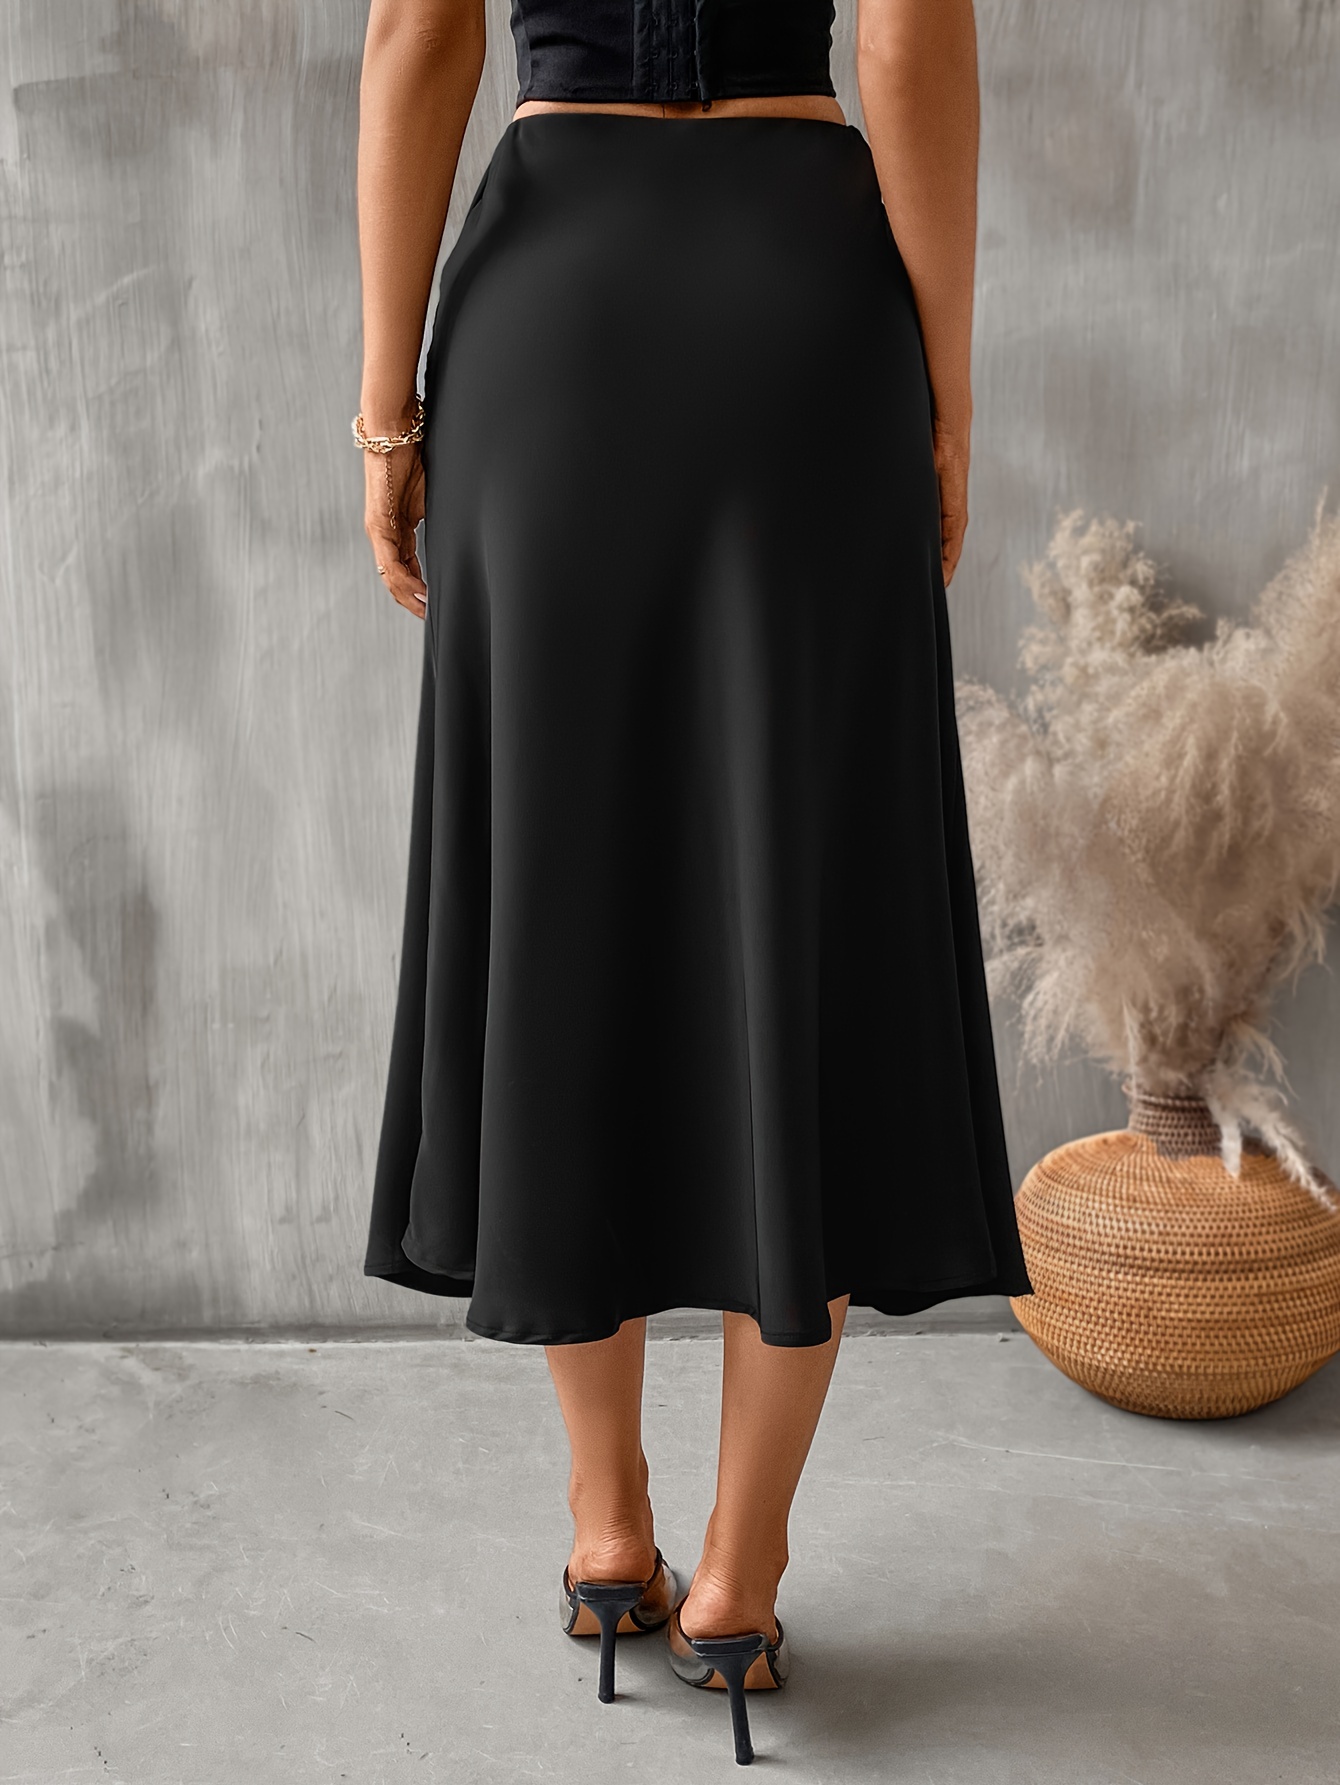 Women's Summer Skirt Black A-line Silk Satin Skirts Beautiful Elegant Midi  High-waisted Long Skirts Woman Skirts Black Skirt